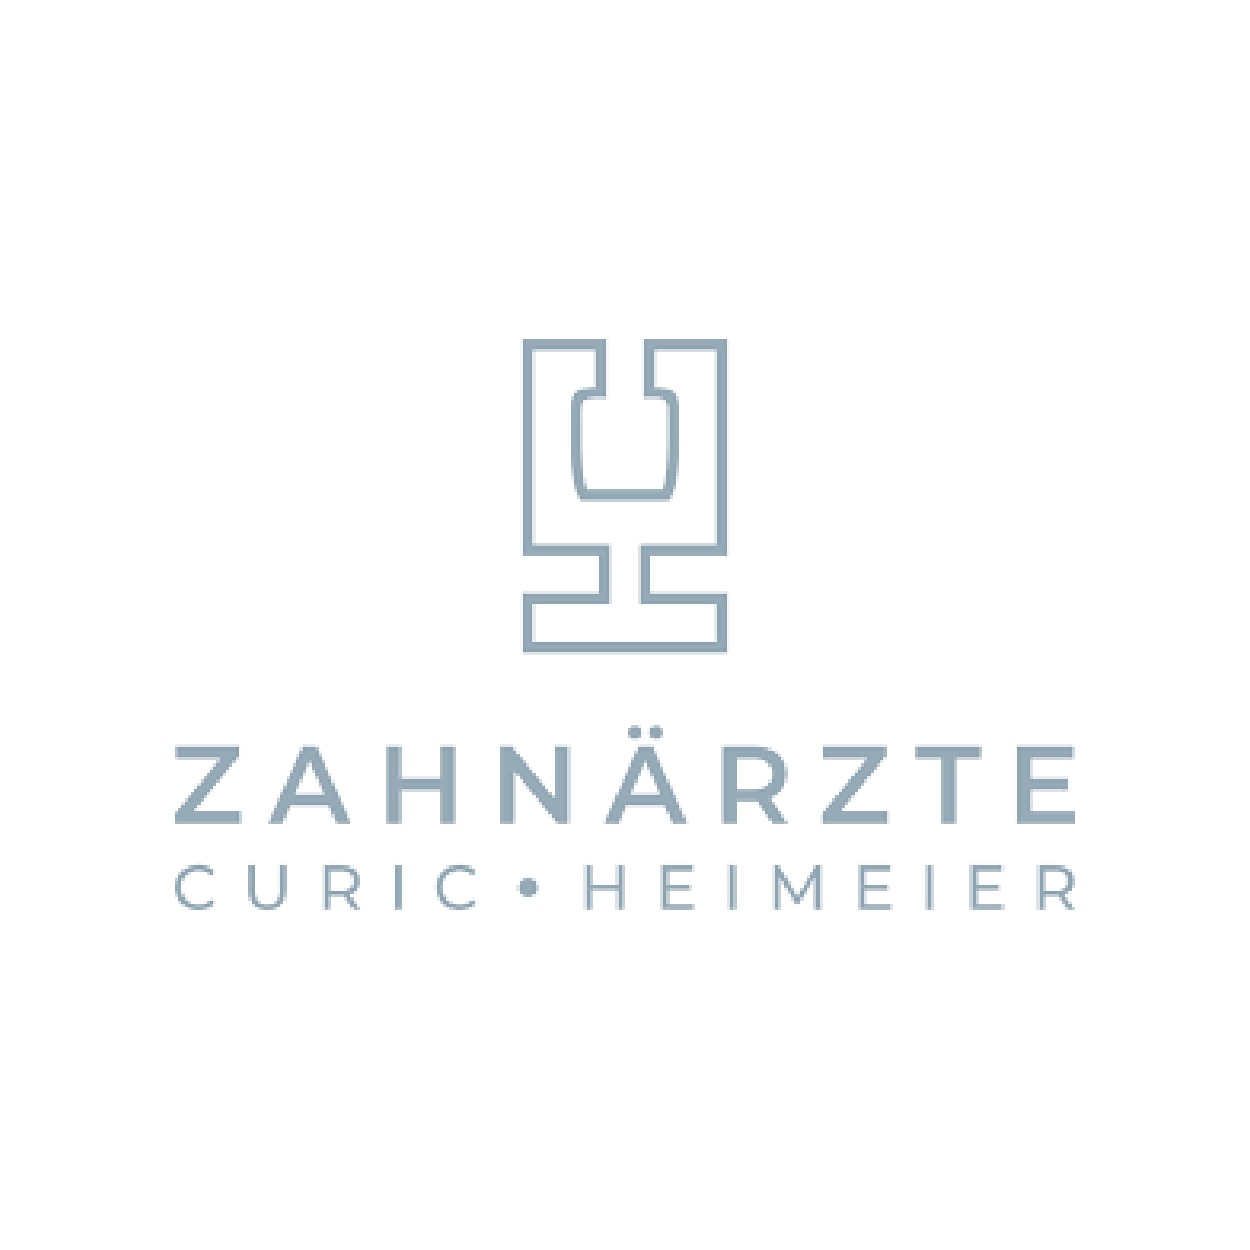 Zahnarzt Essen - Stadtwaldpraxis Curic Heimeier in Essen - Logo